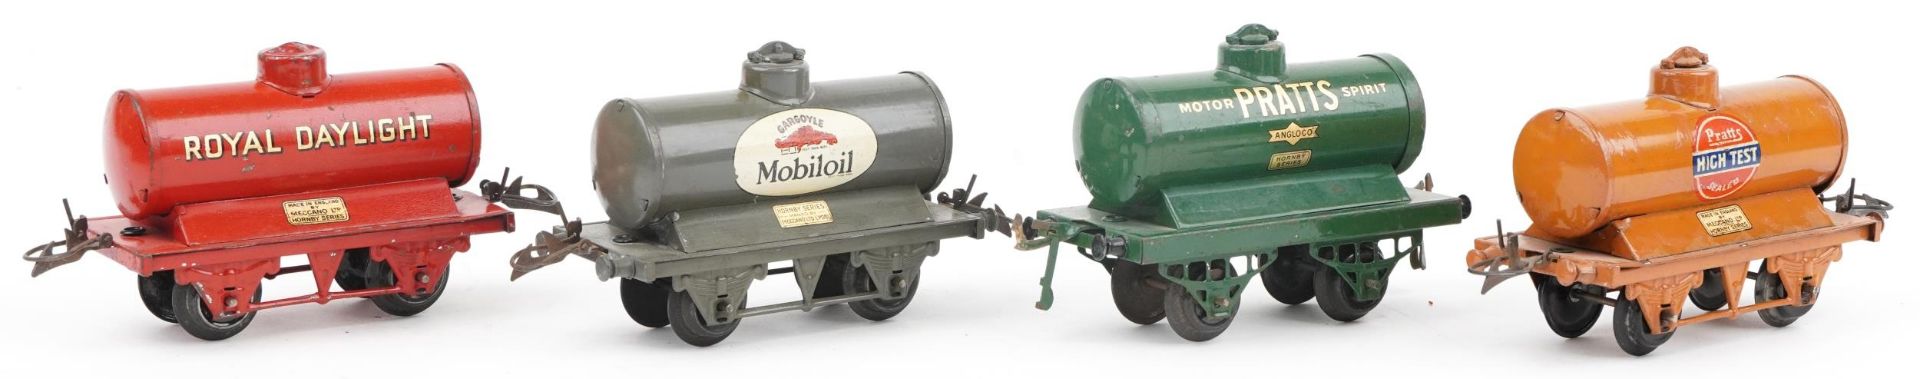 Four Hornby O gauge tinplate model railway advertising tankers comprising Pratt's Motor Spirit,